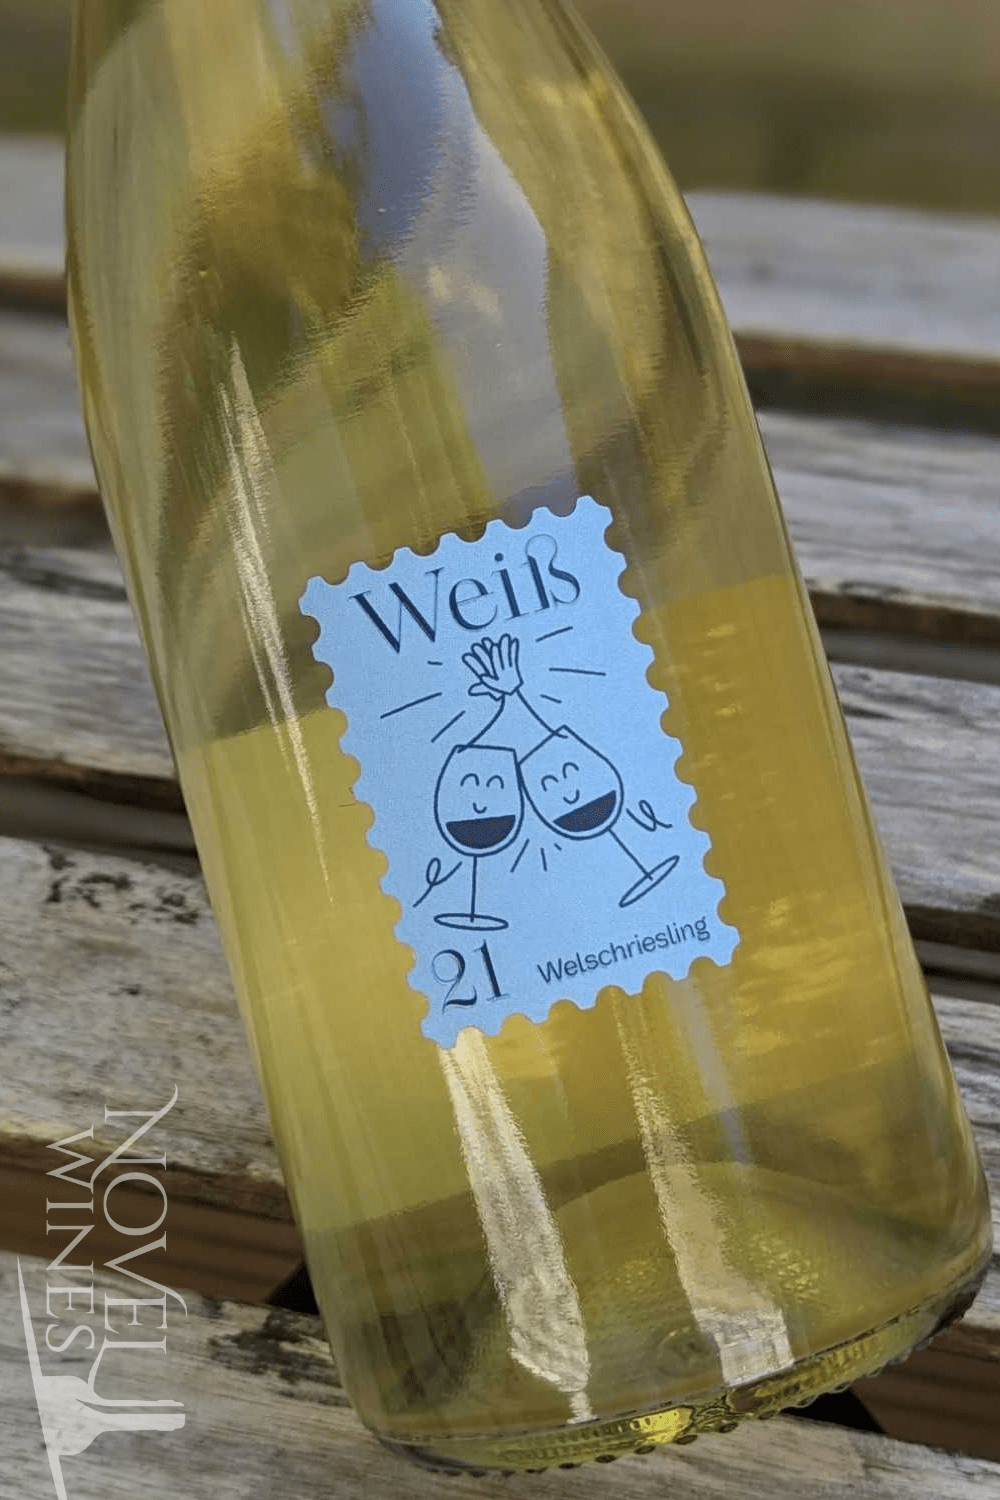 Glatzer White Wine Hanna Glatzer's Weiss Organic Welschriesling 2022, Austria